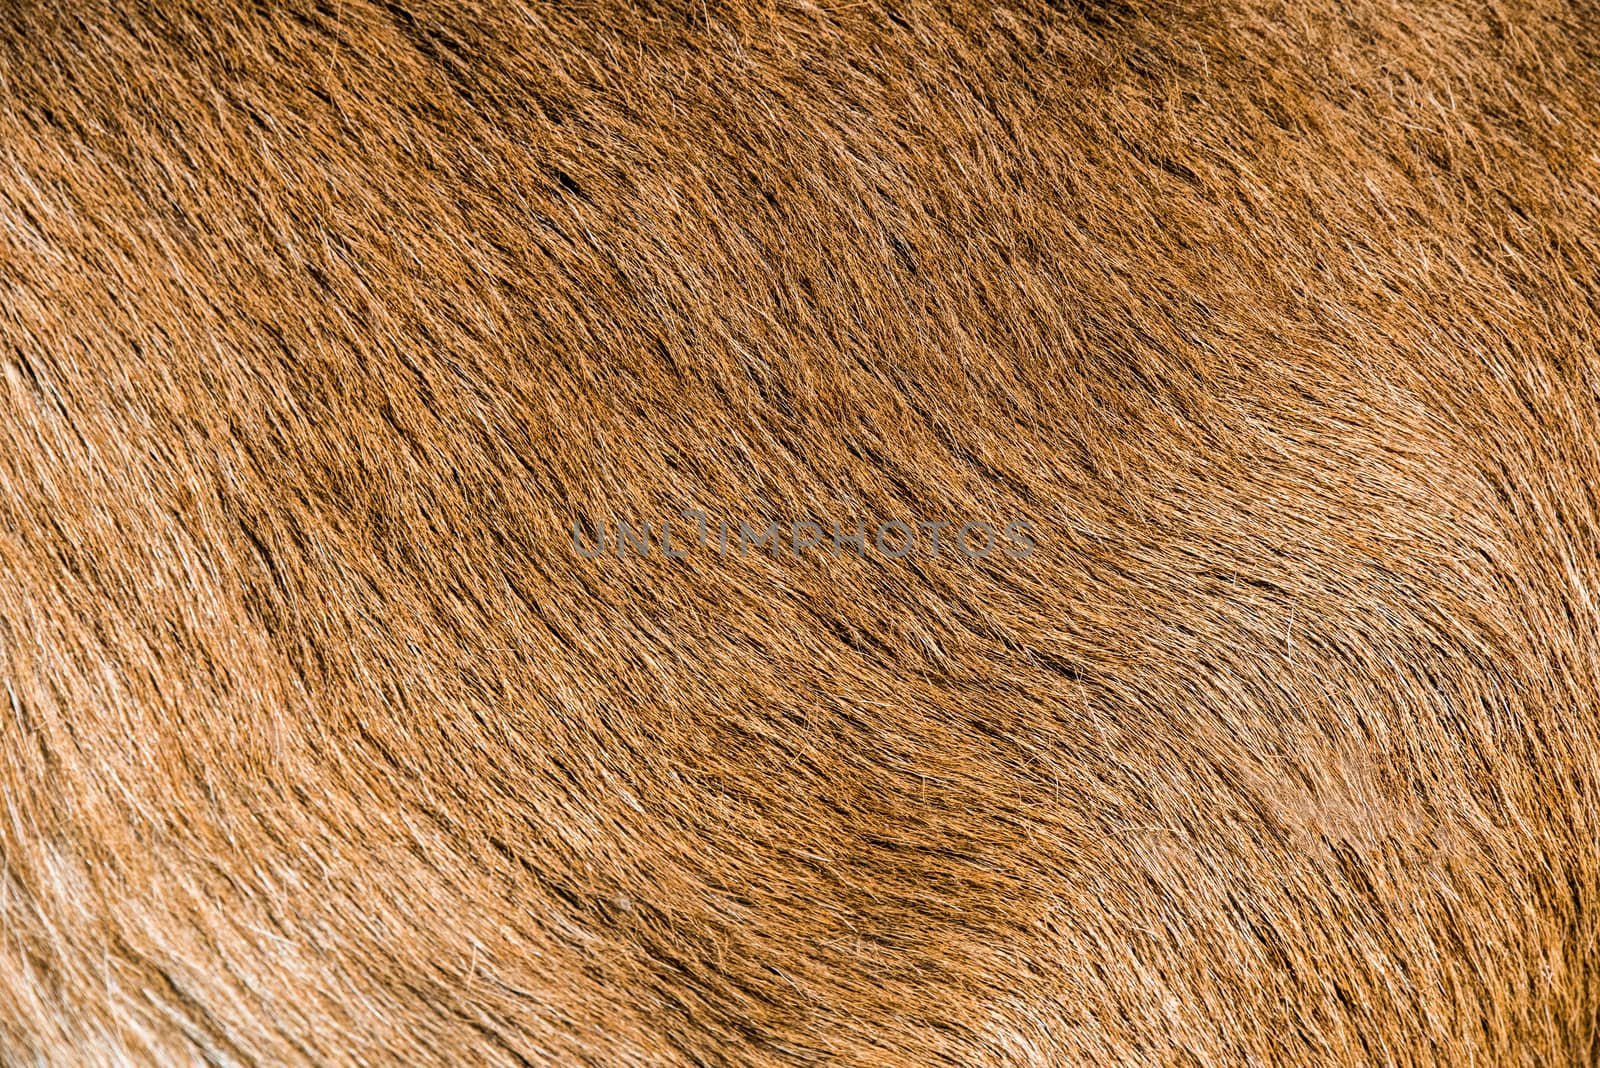 Goat brown fur background skin natural texture.